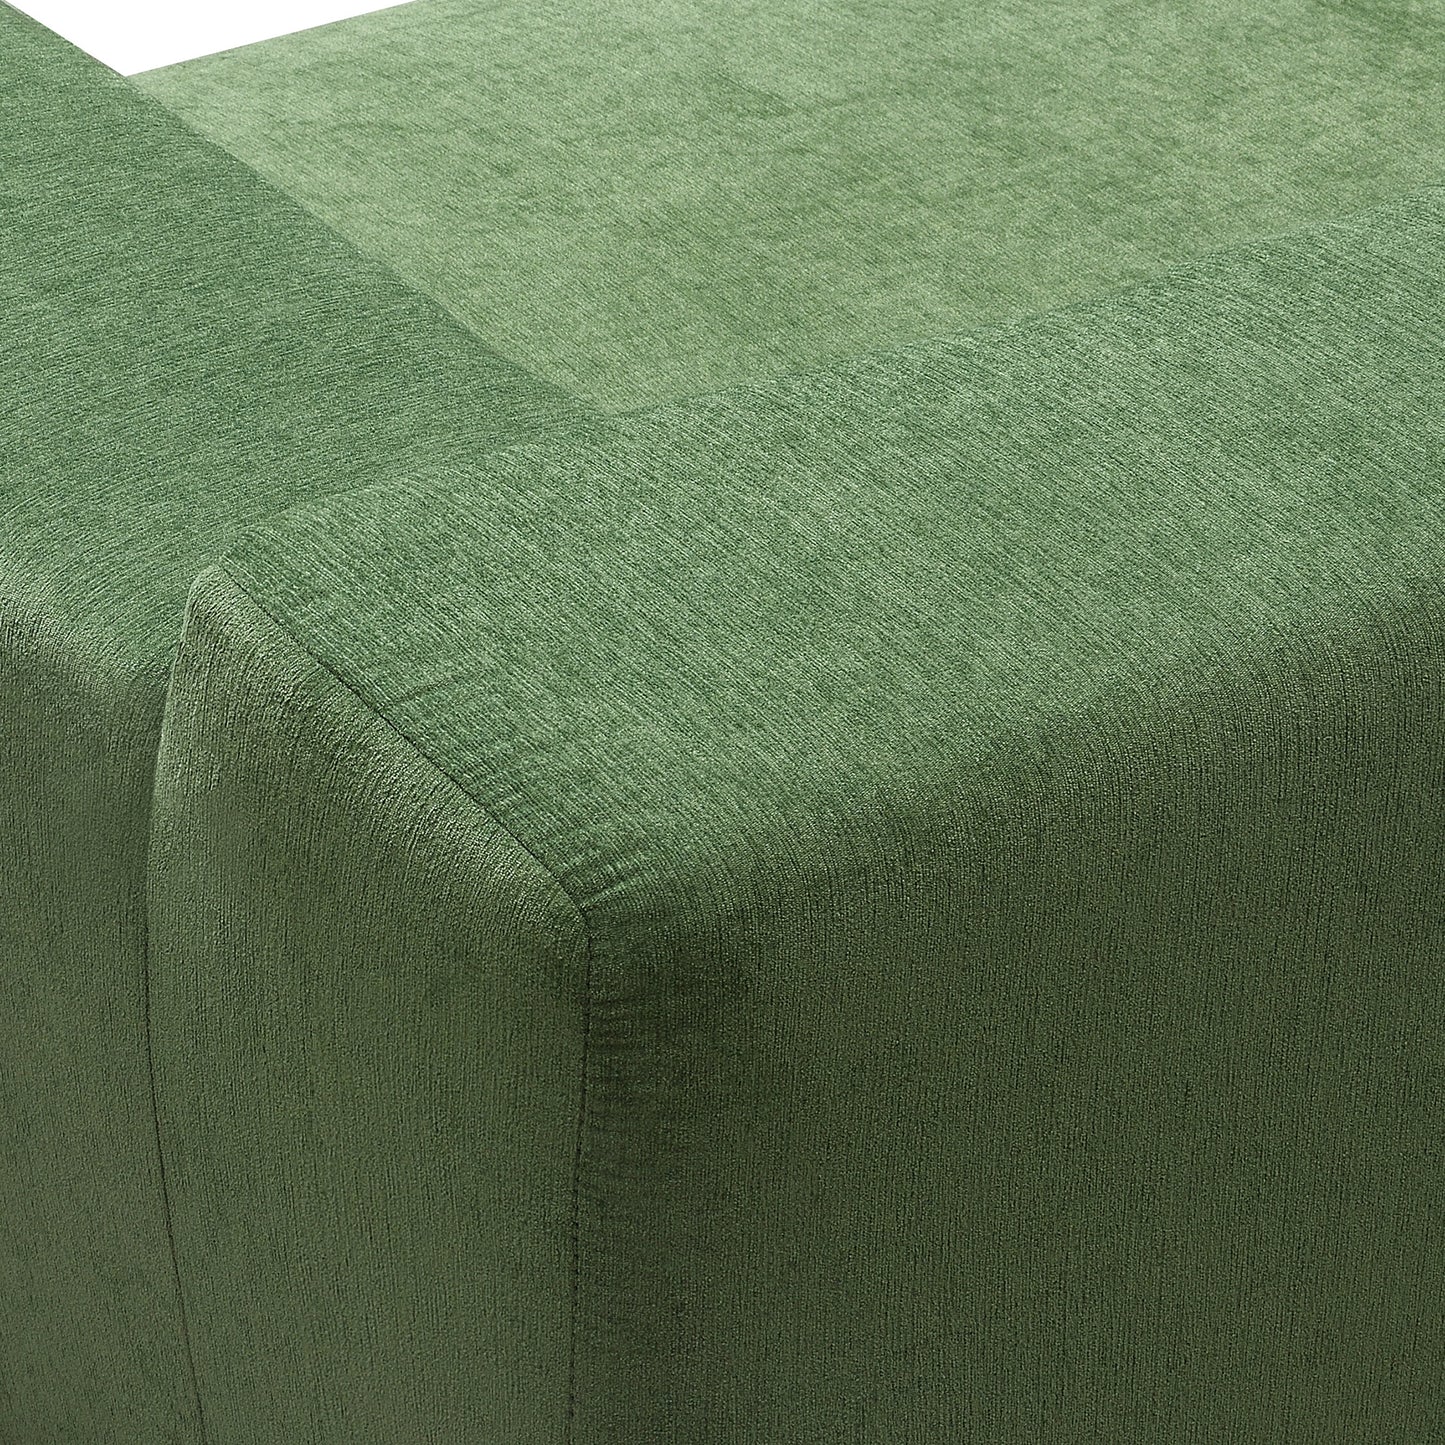 109*68 Green Upholstered Sleeper Sofa Set with L-Shape Design